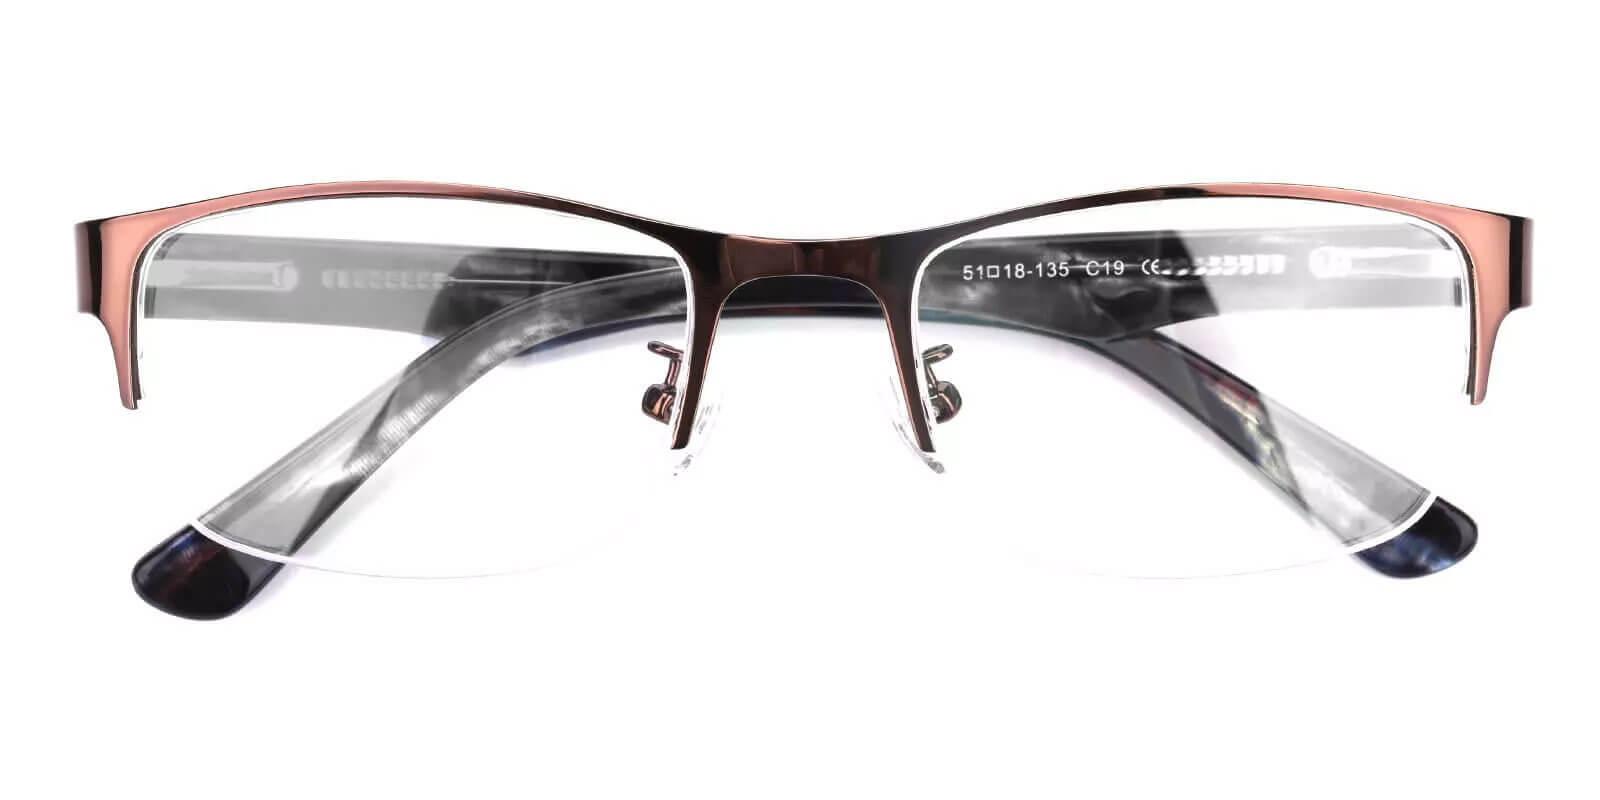 Julian Brown Metal Eyeglasses , NosePads , SpringHinges Frames from ABBE Glasses